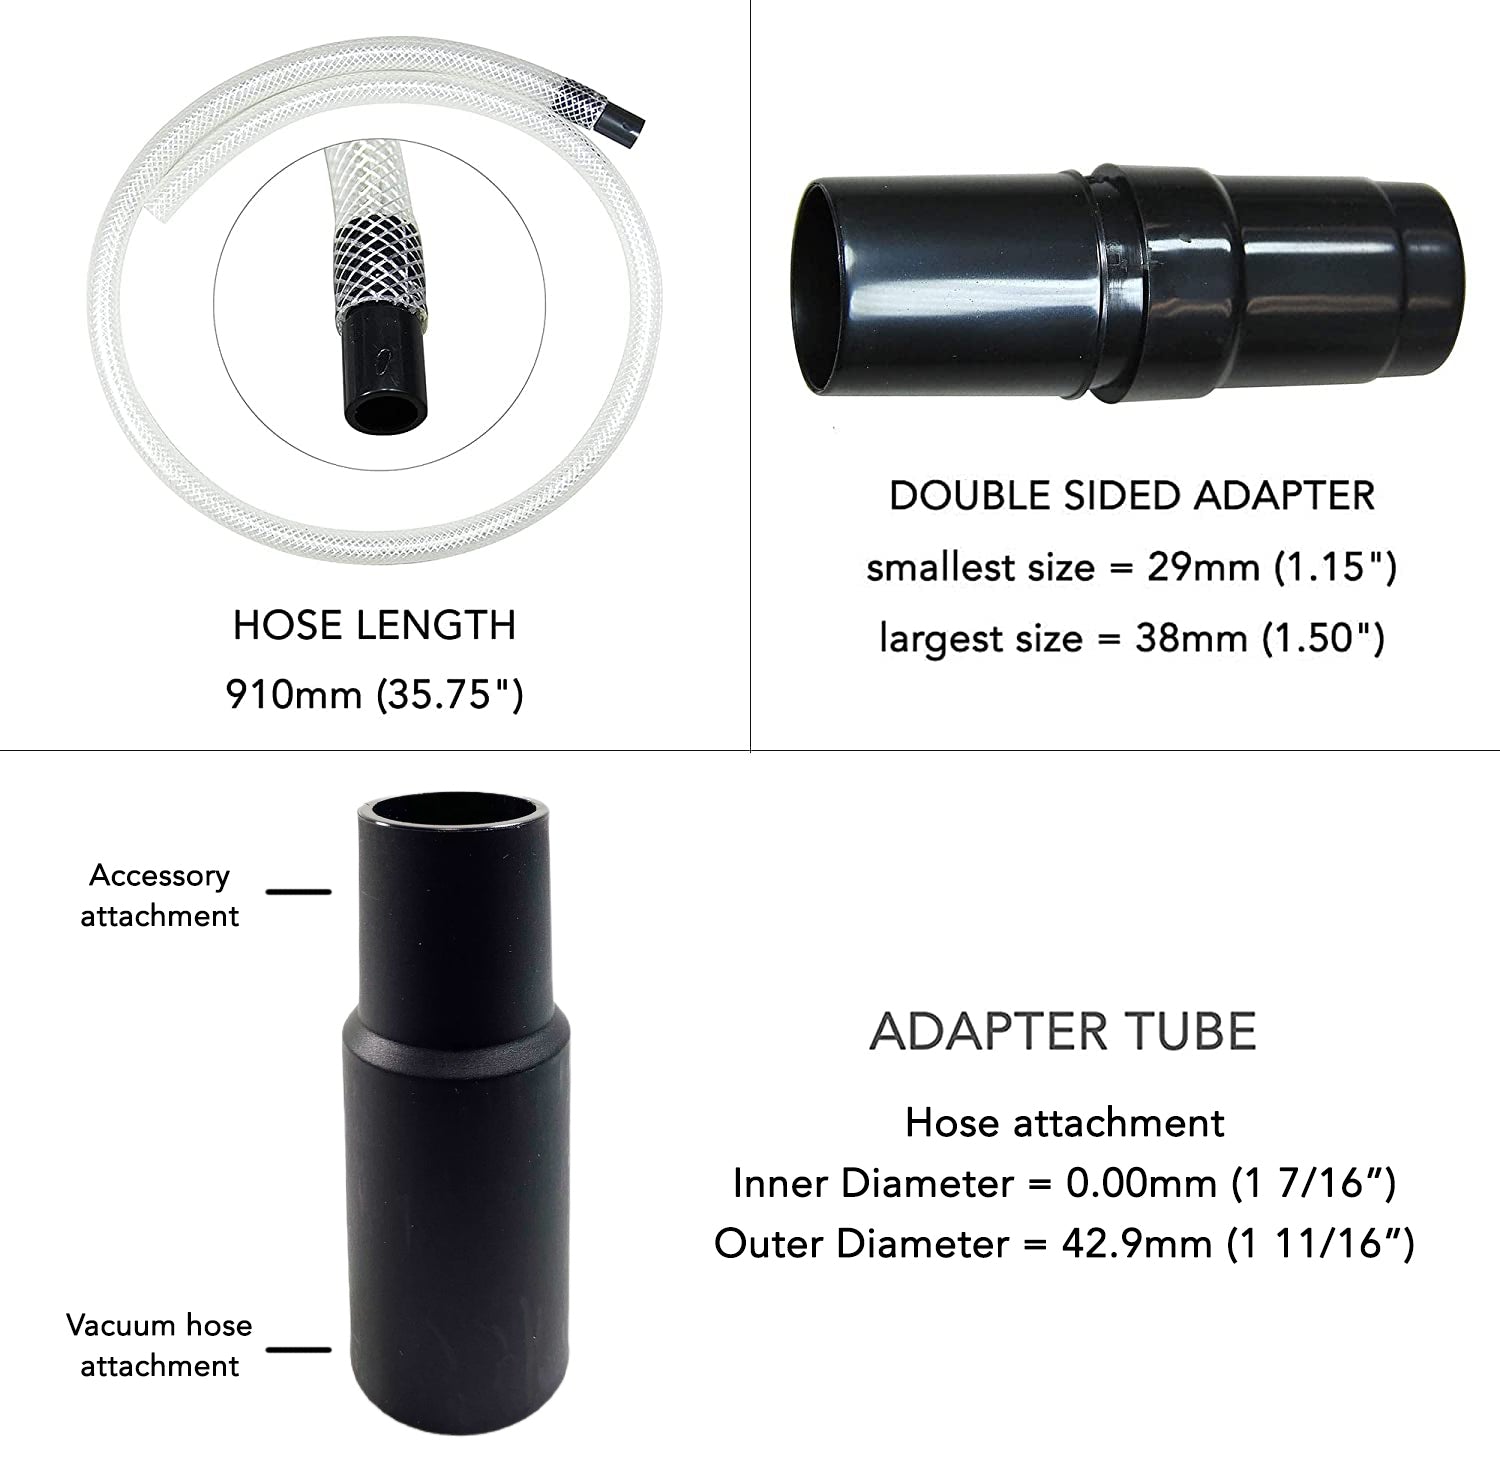 Vacuum Cleaner Micro/Mini Attachments Kit - 8 Piece